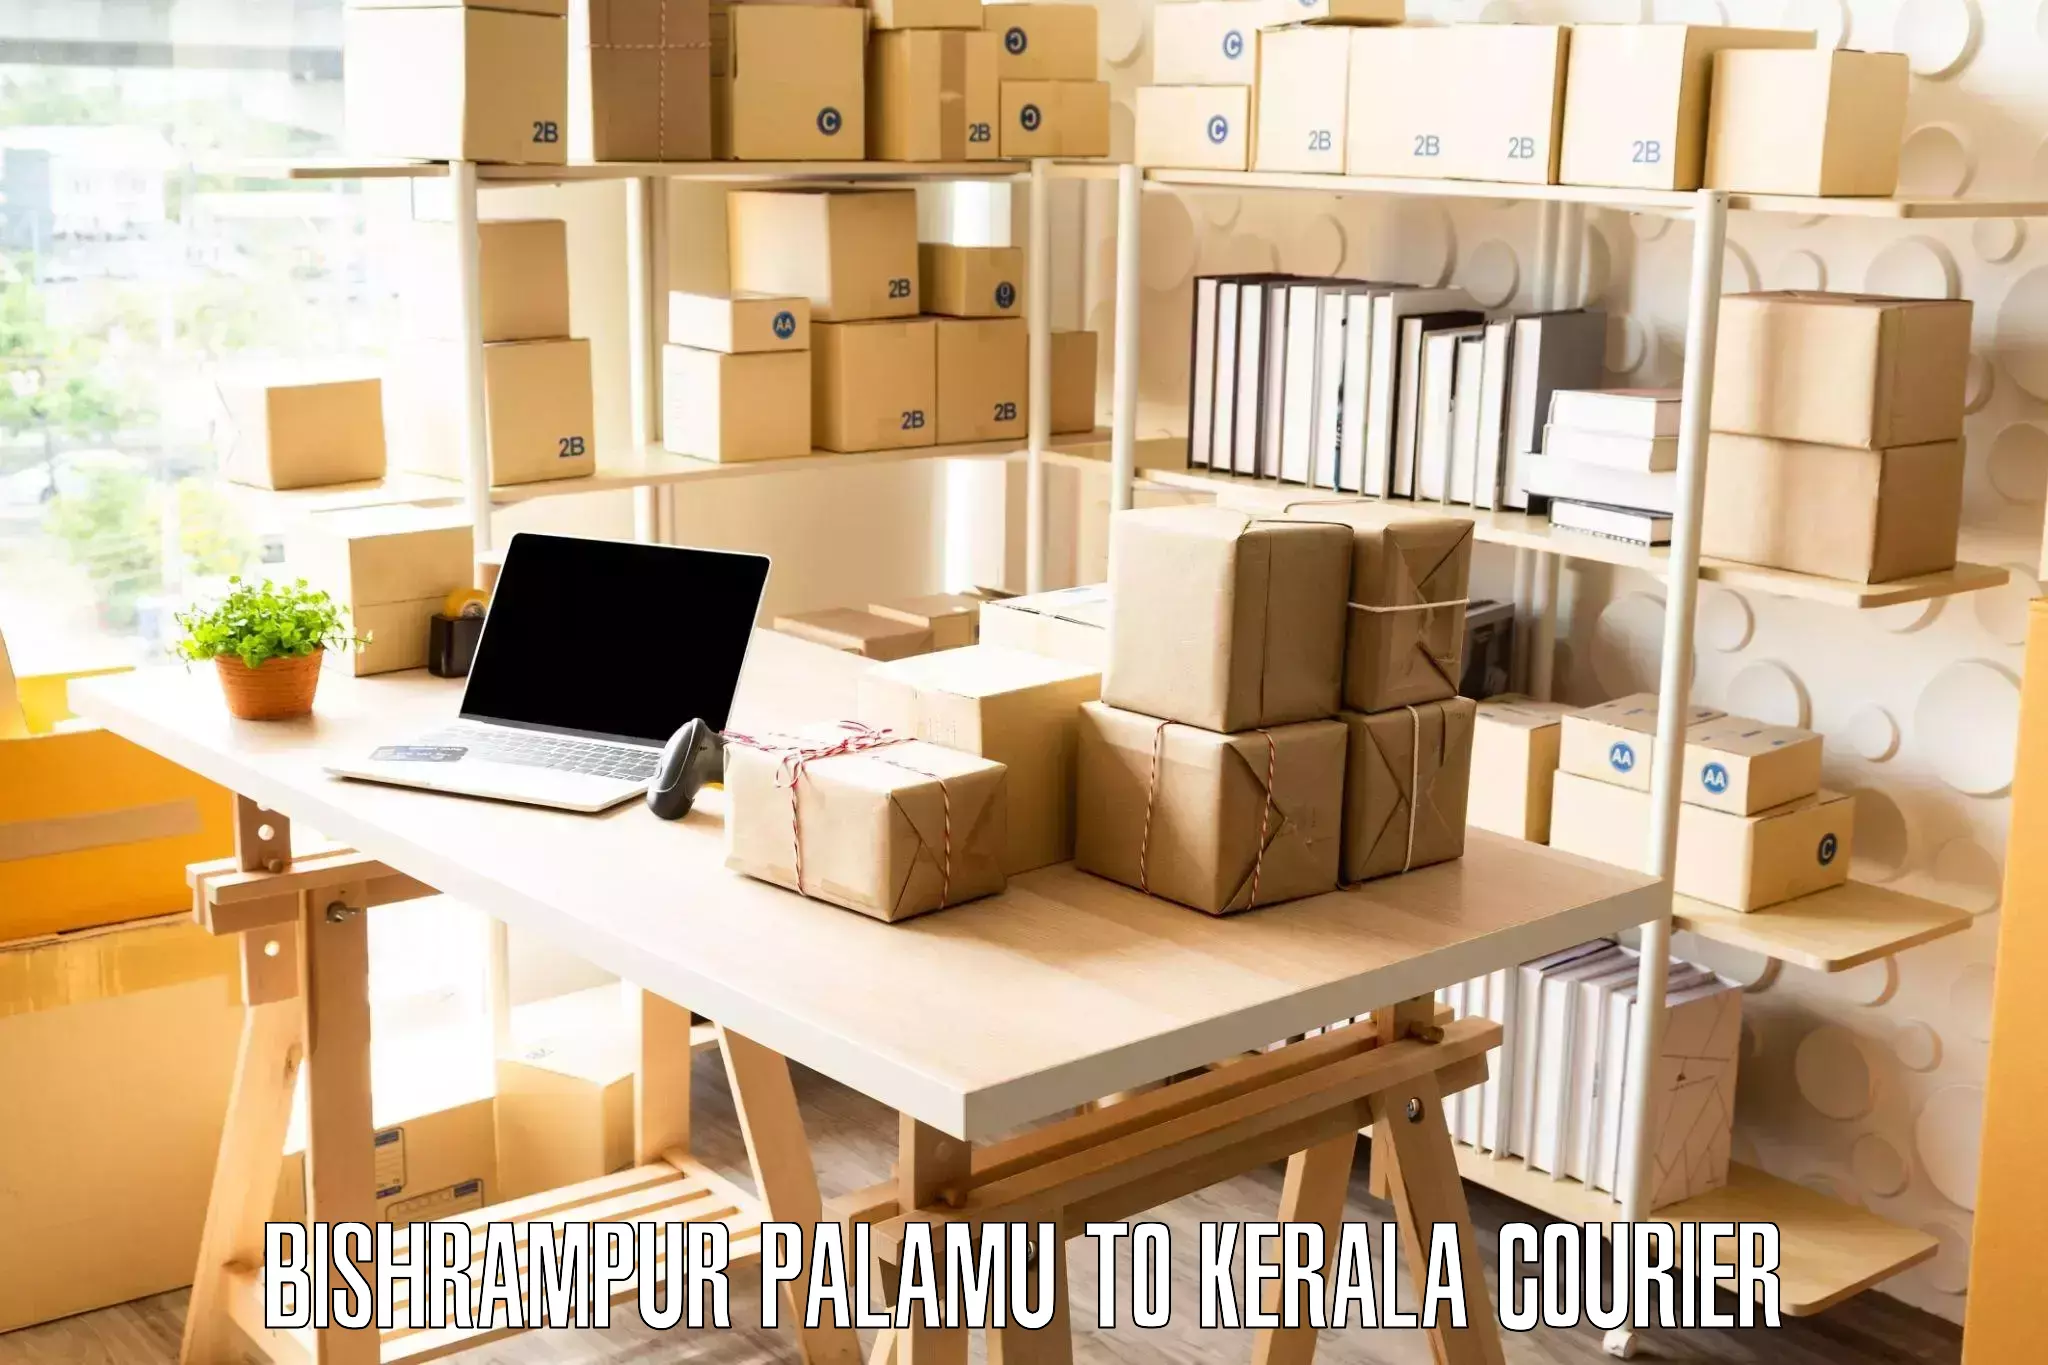 Household logistics services Bishrampur Palamu to Calicut